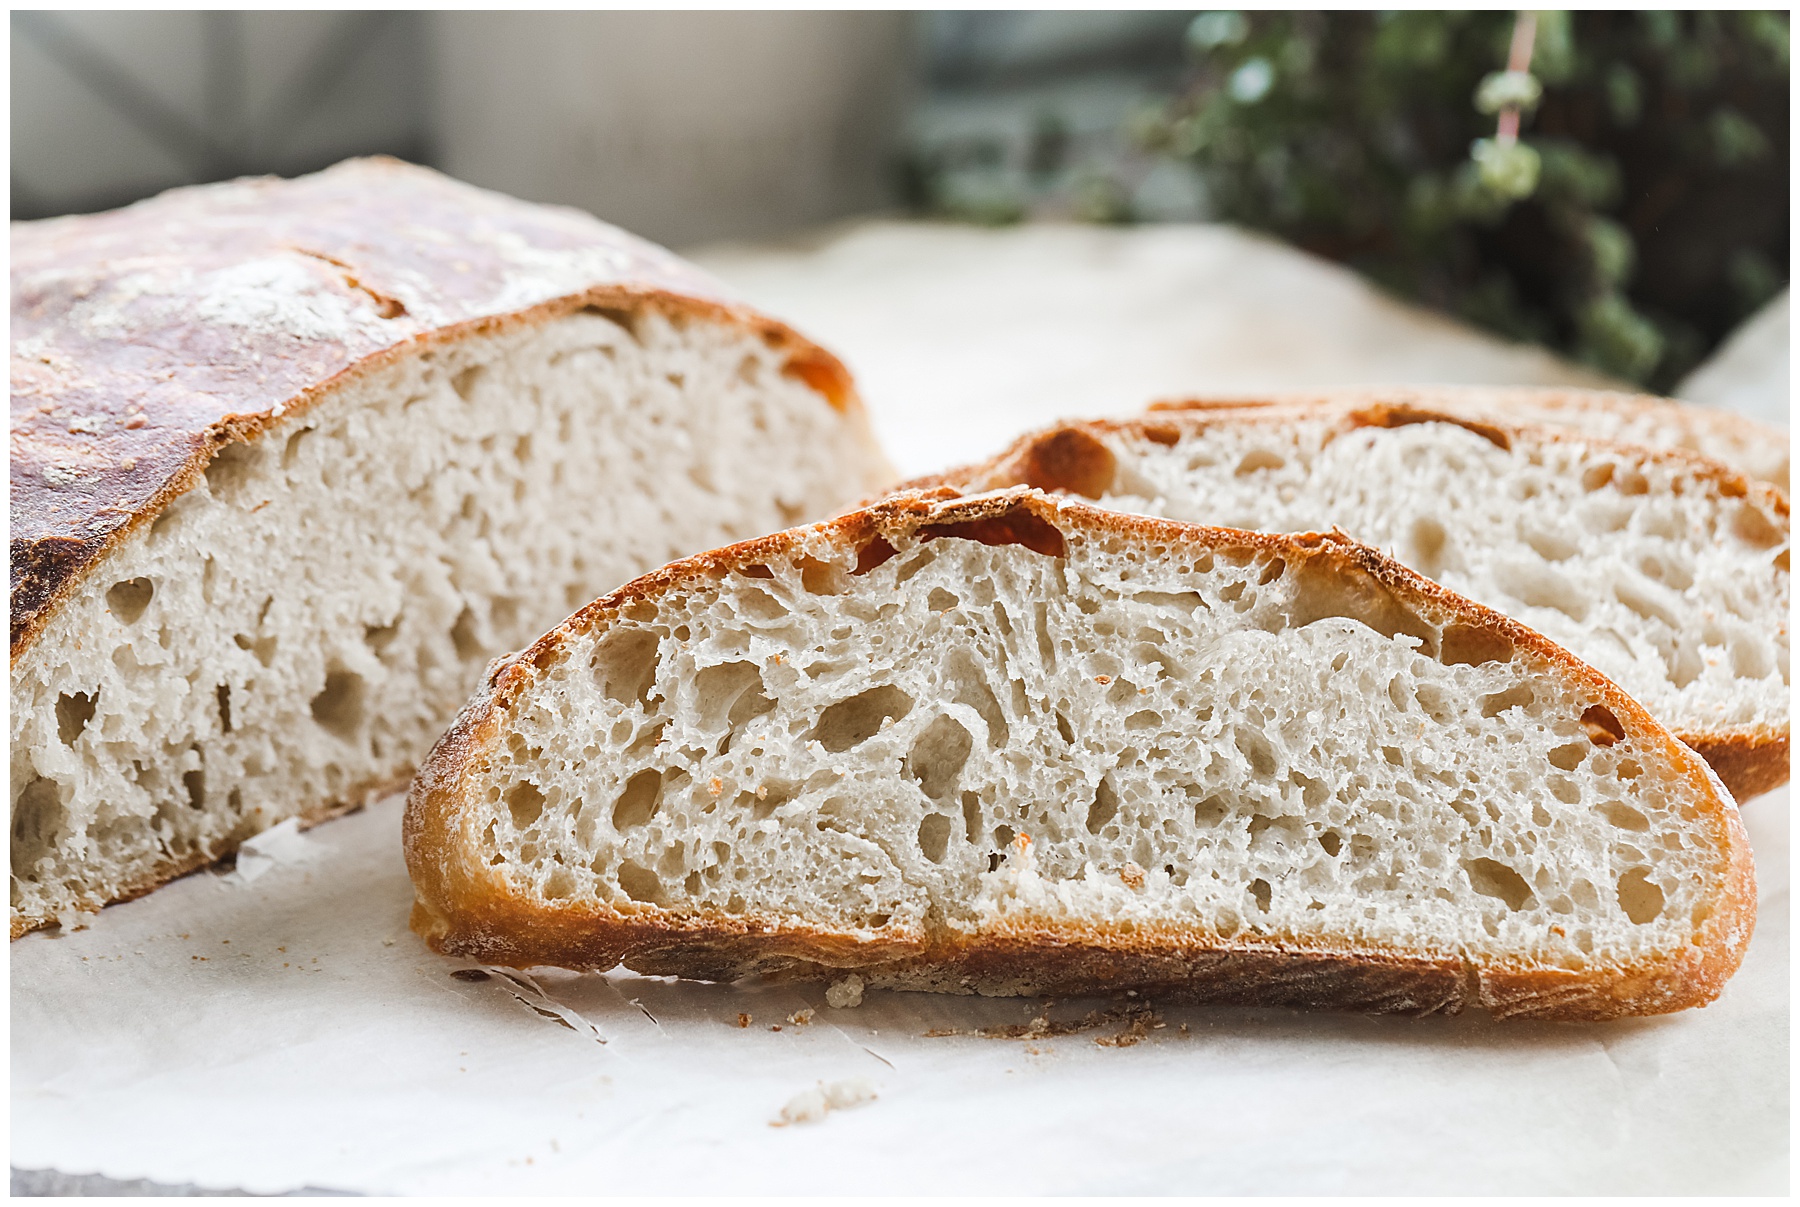 How to make sourdough bread